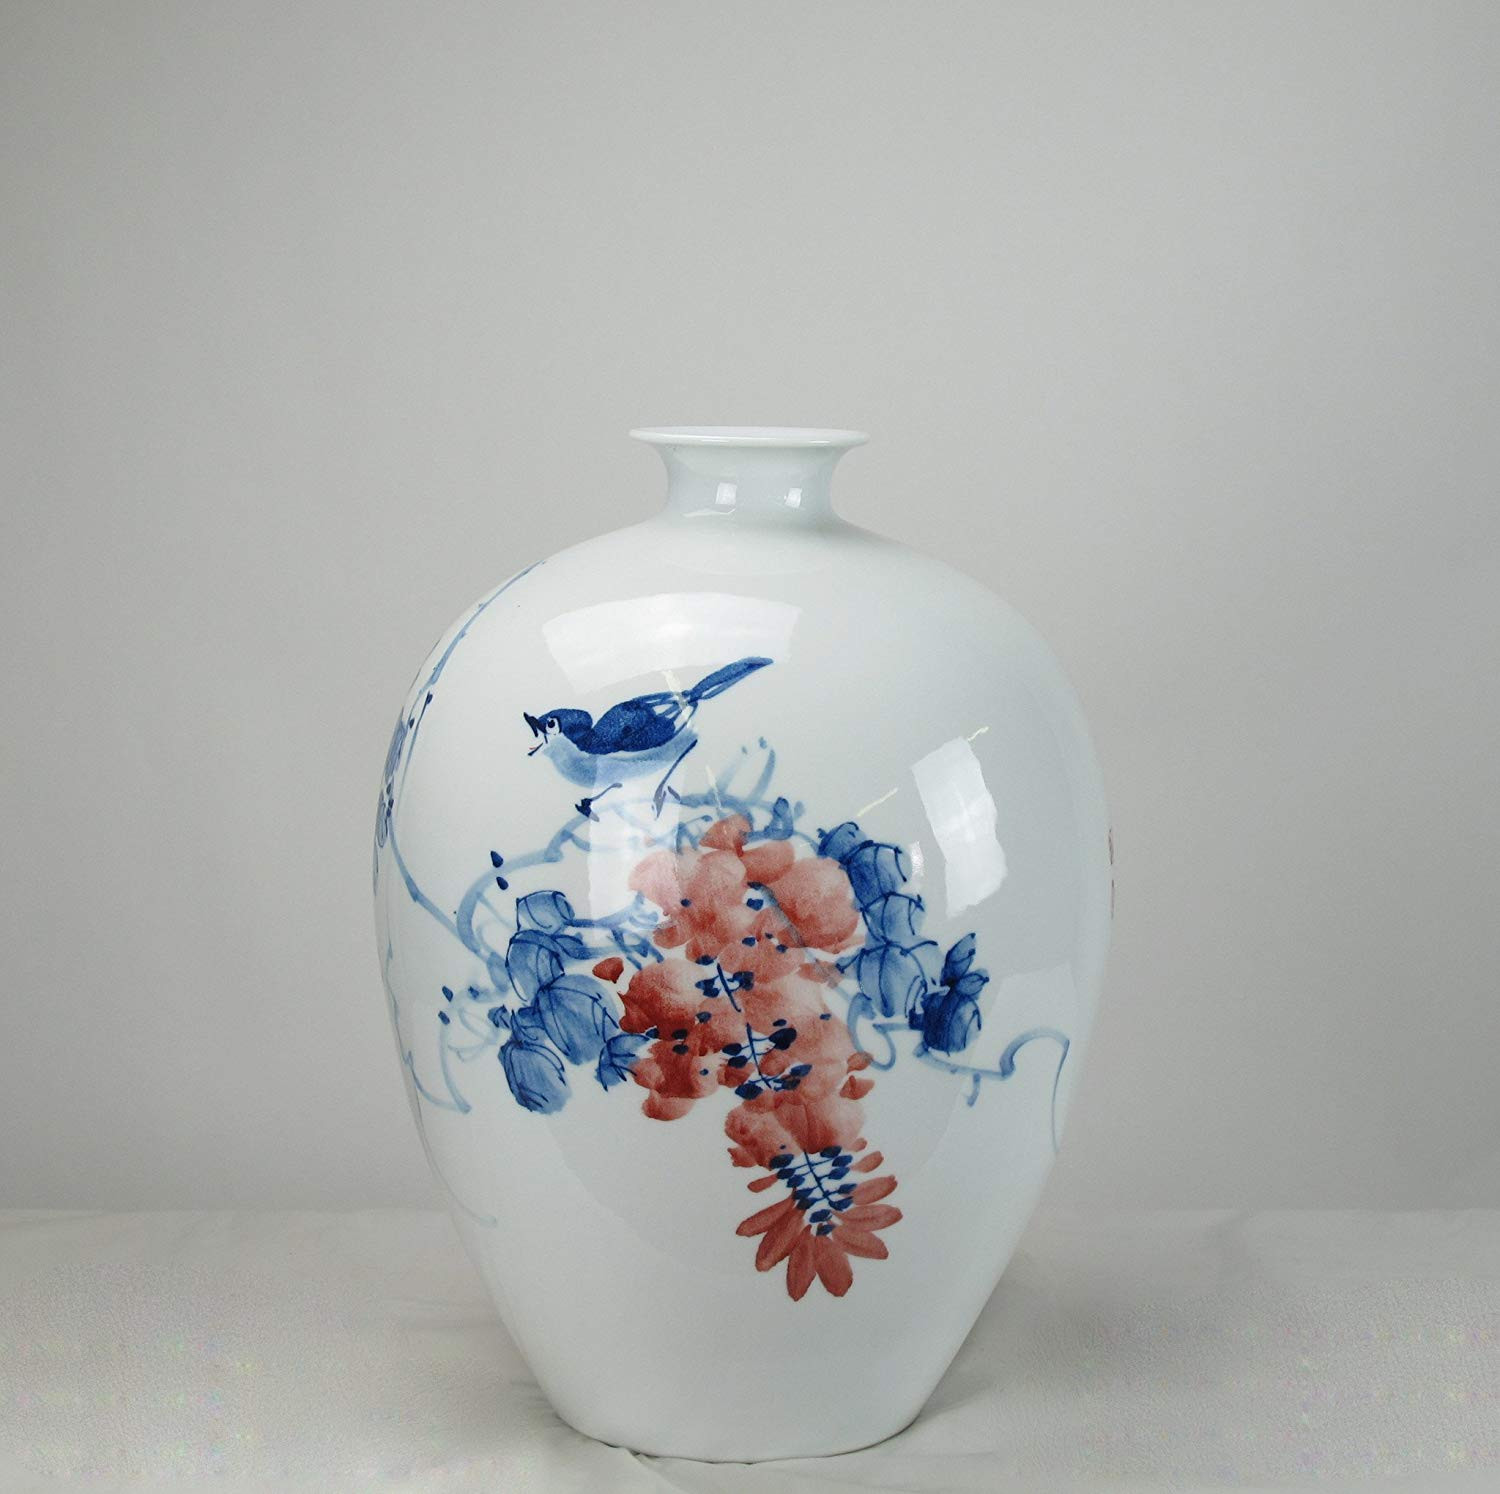 blue and white urn vases of amazon com blue white red flower and blue vines porcelain vase inside amazon com blue white red flower and blue vines porcelain vase home kitchen